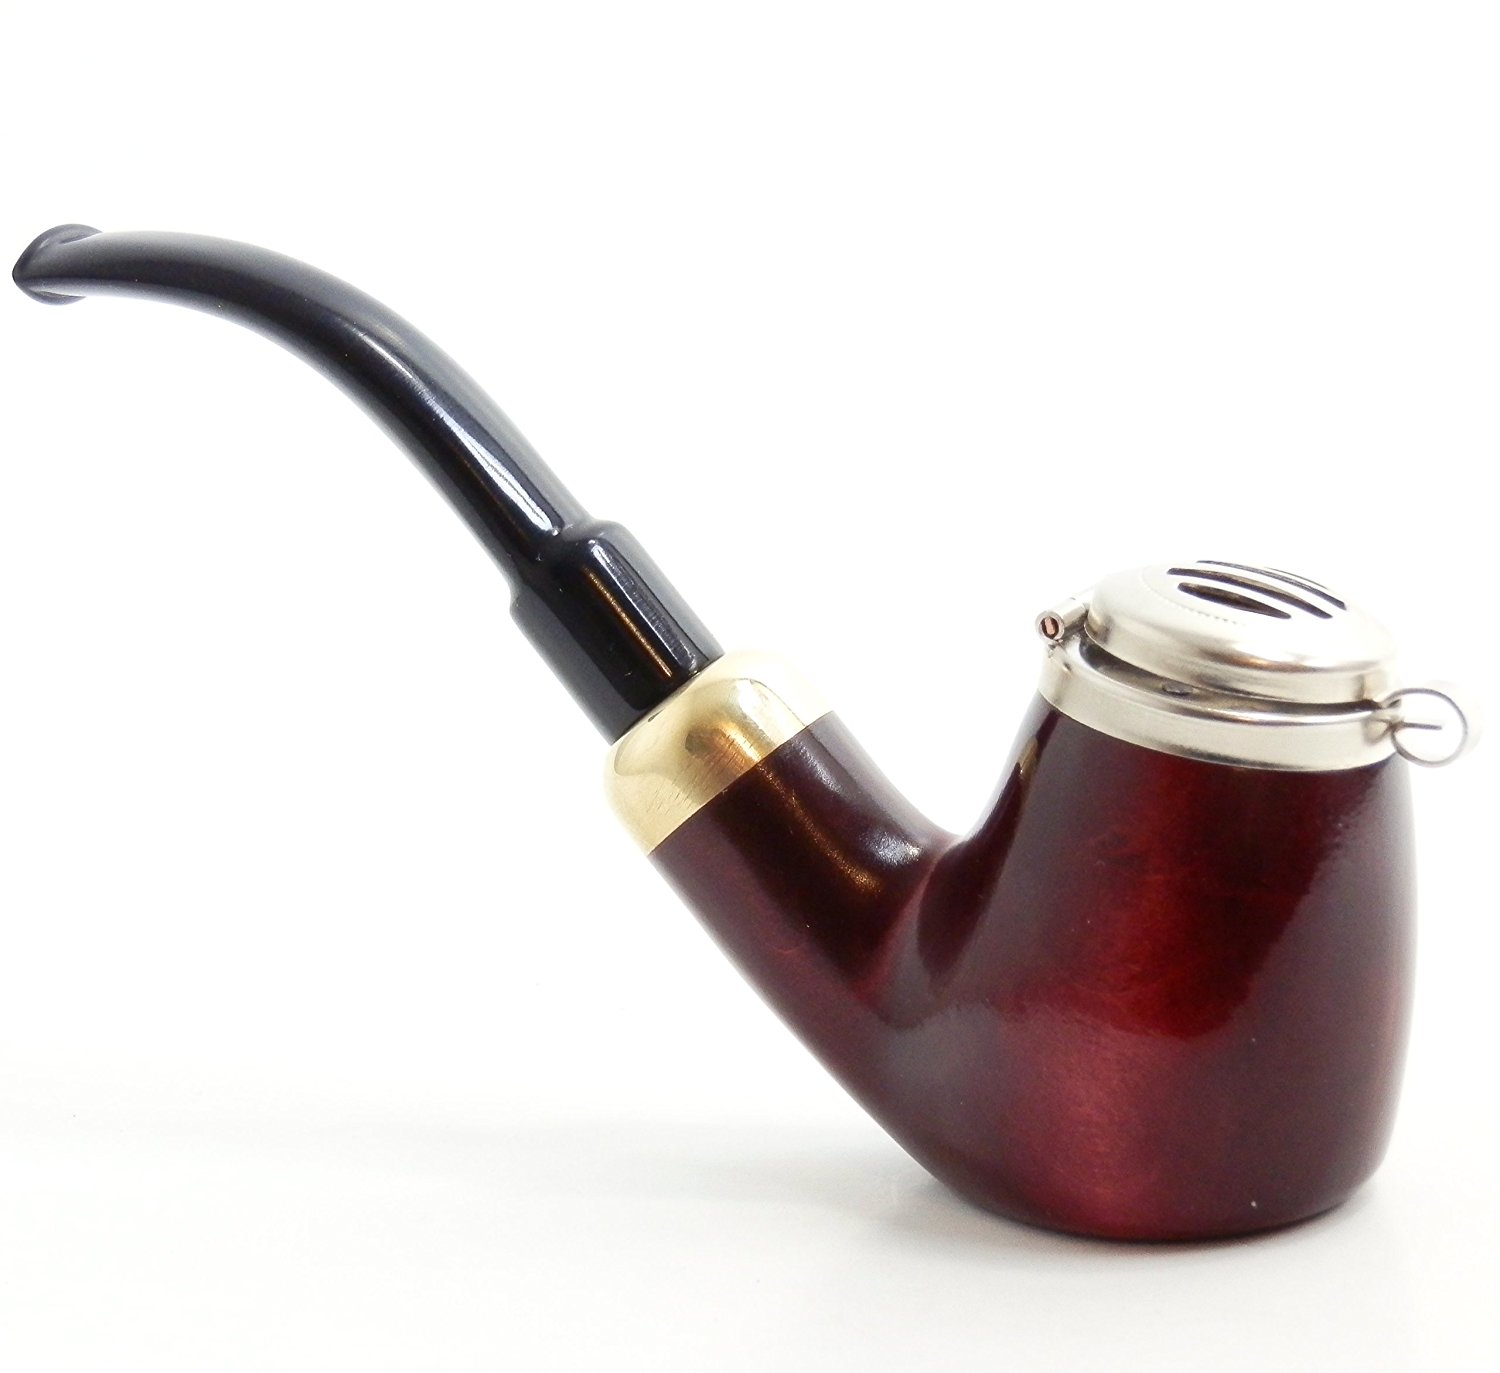 Amazon.com: Mr. Brog Full Bent Smoking Tobacco Pipe - Model No: 21 ...